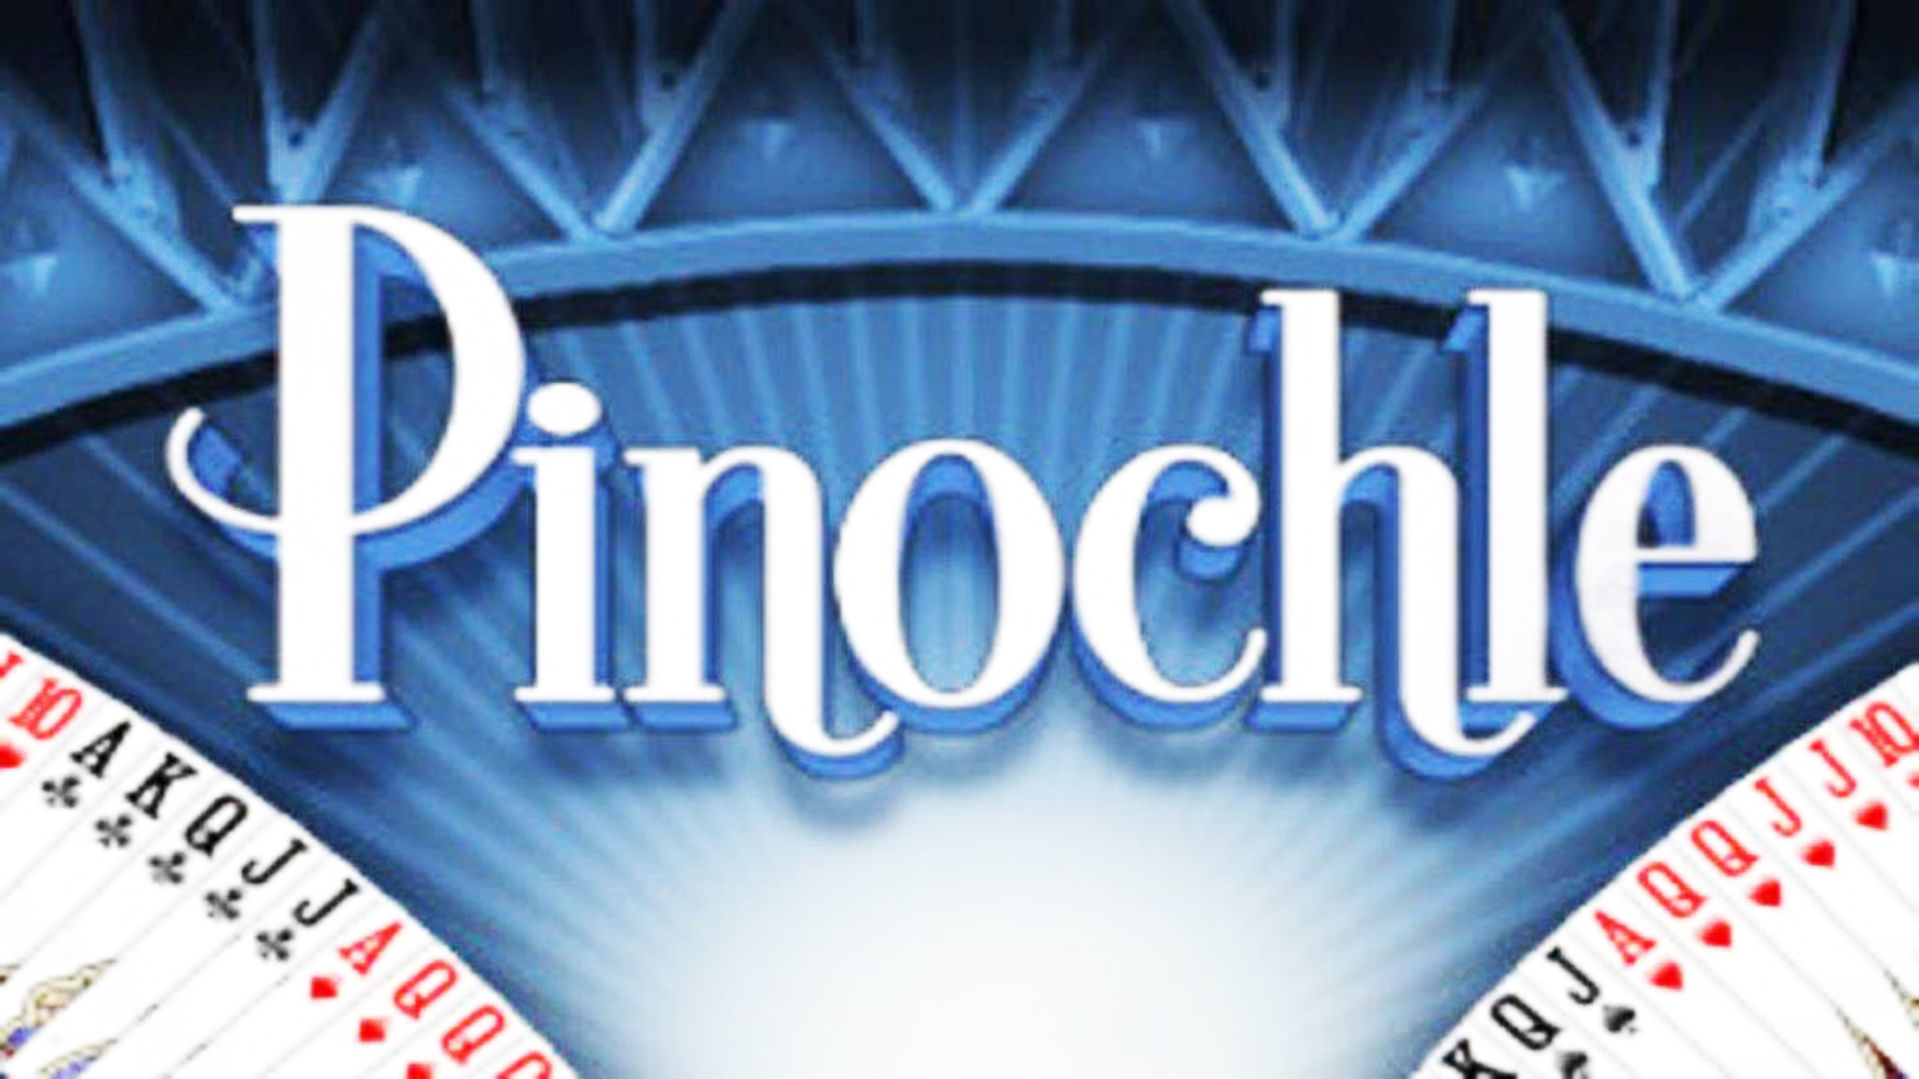 pinochle definition